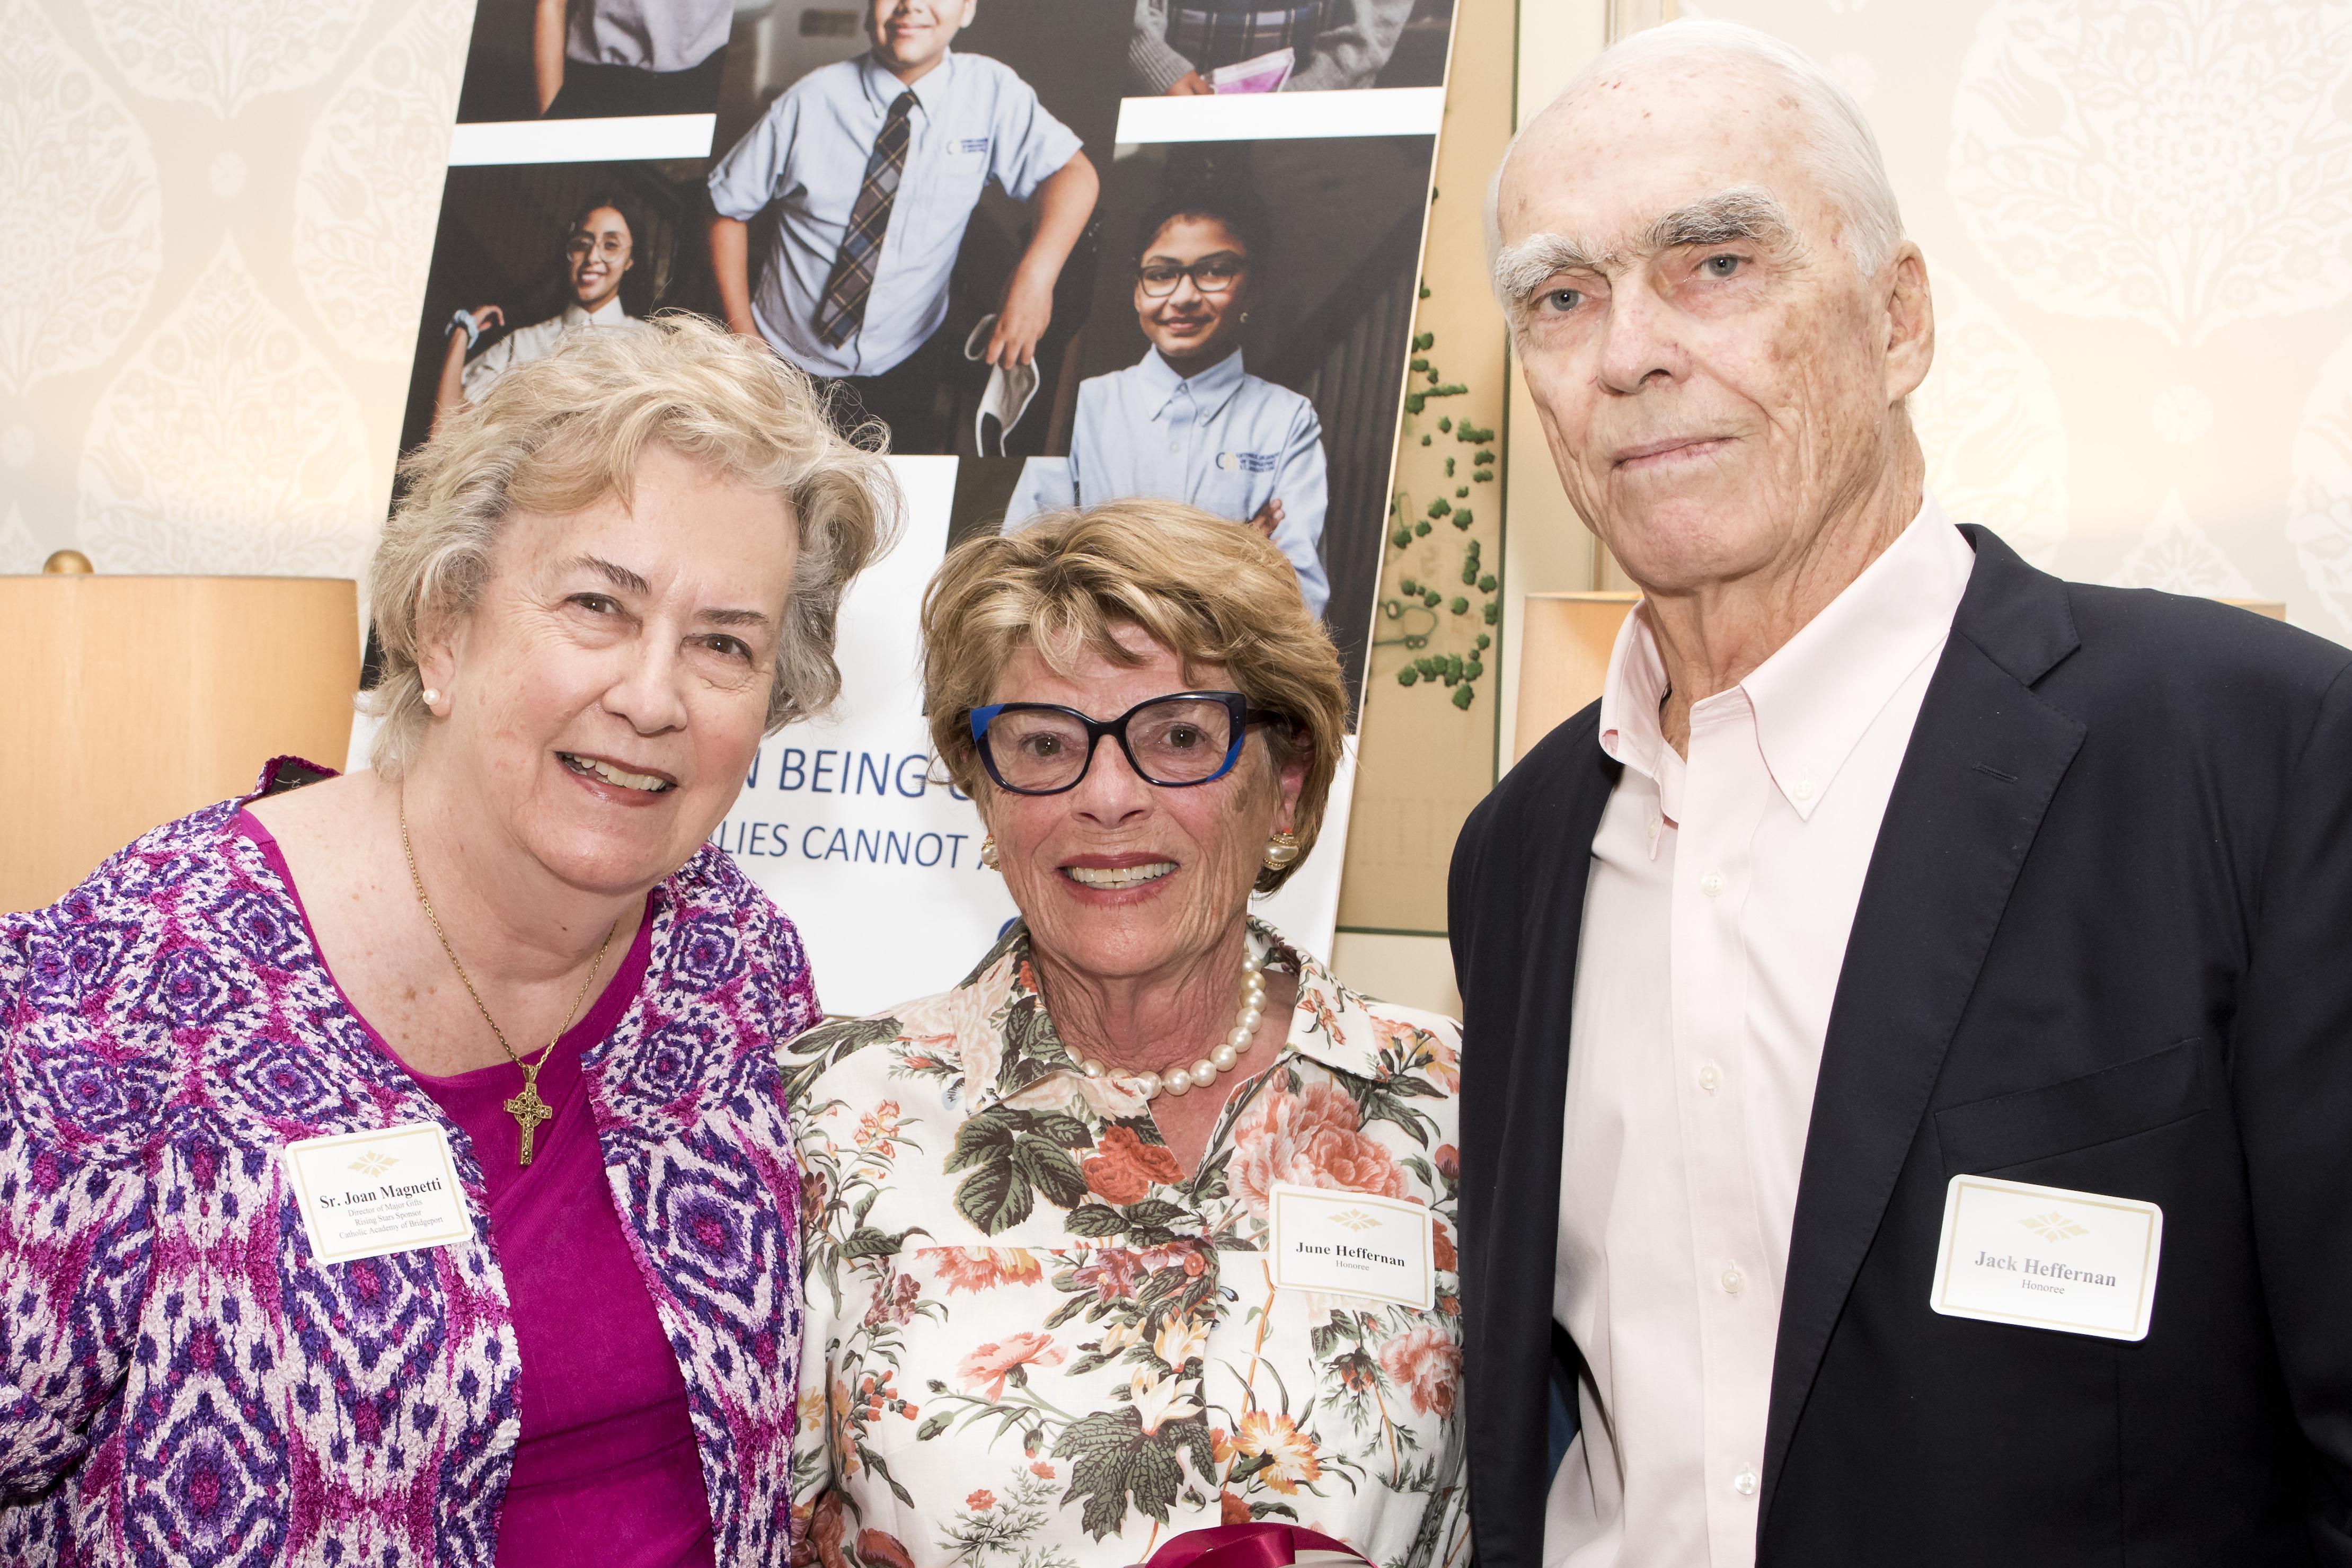 Joan Magnetti, RSCJ, with June Dolce and Jack Heffernan.